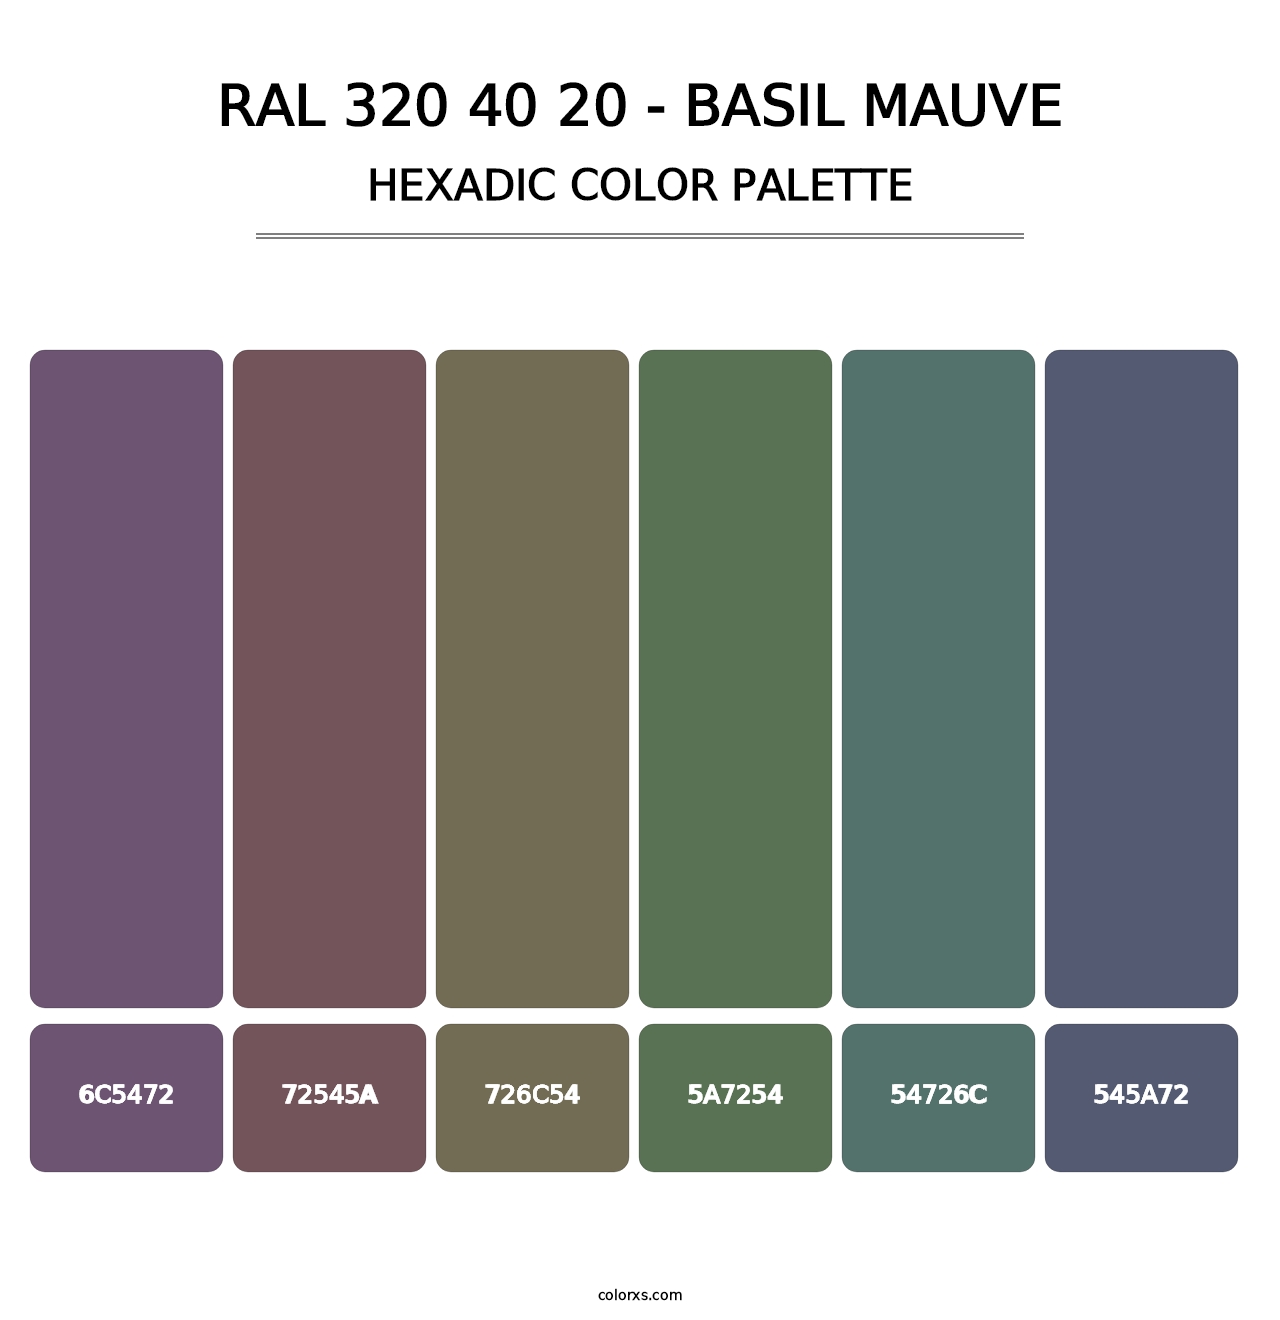 RAL 320 40 20 - Basil Mauve - Hexadic Color Palette